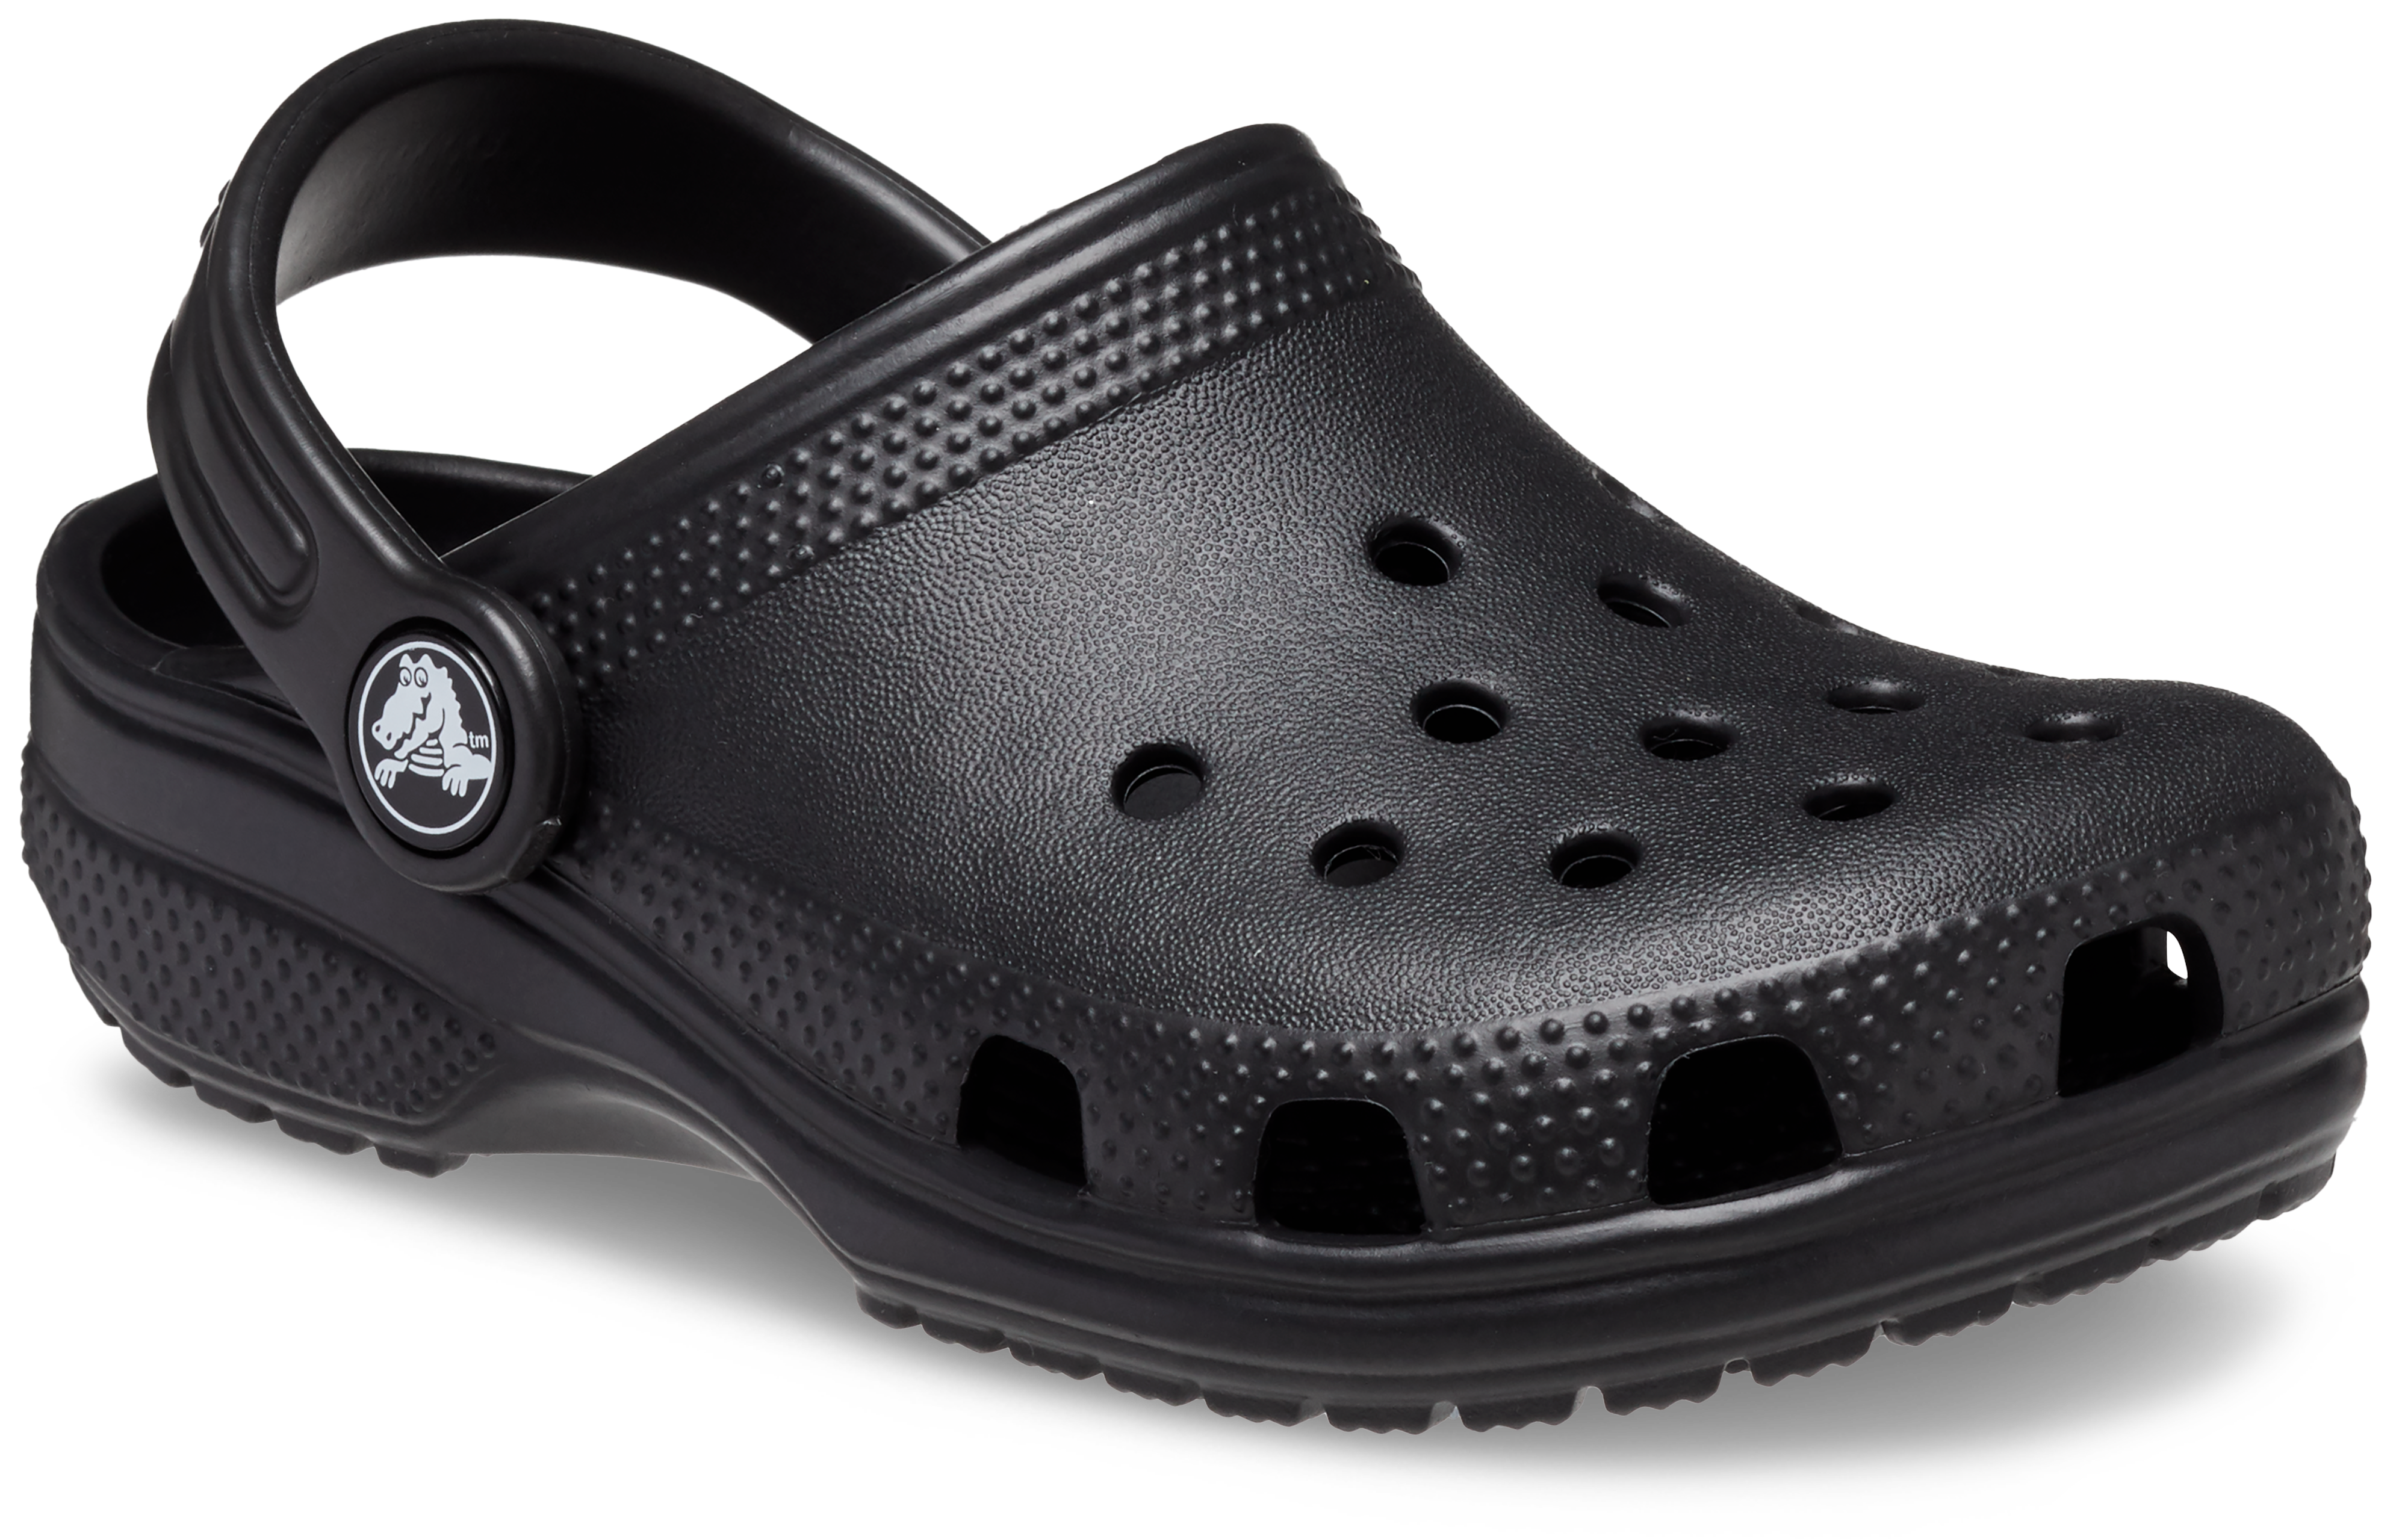 Crocs Sport Accessories & Athletic Gear - Hibbett